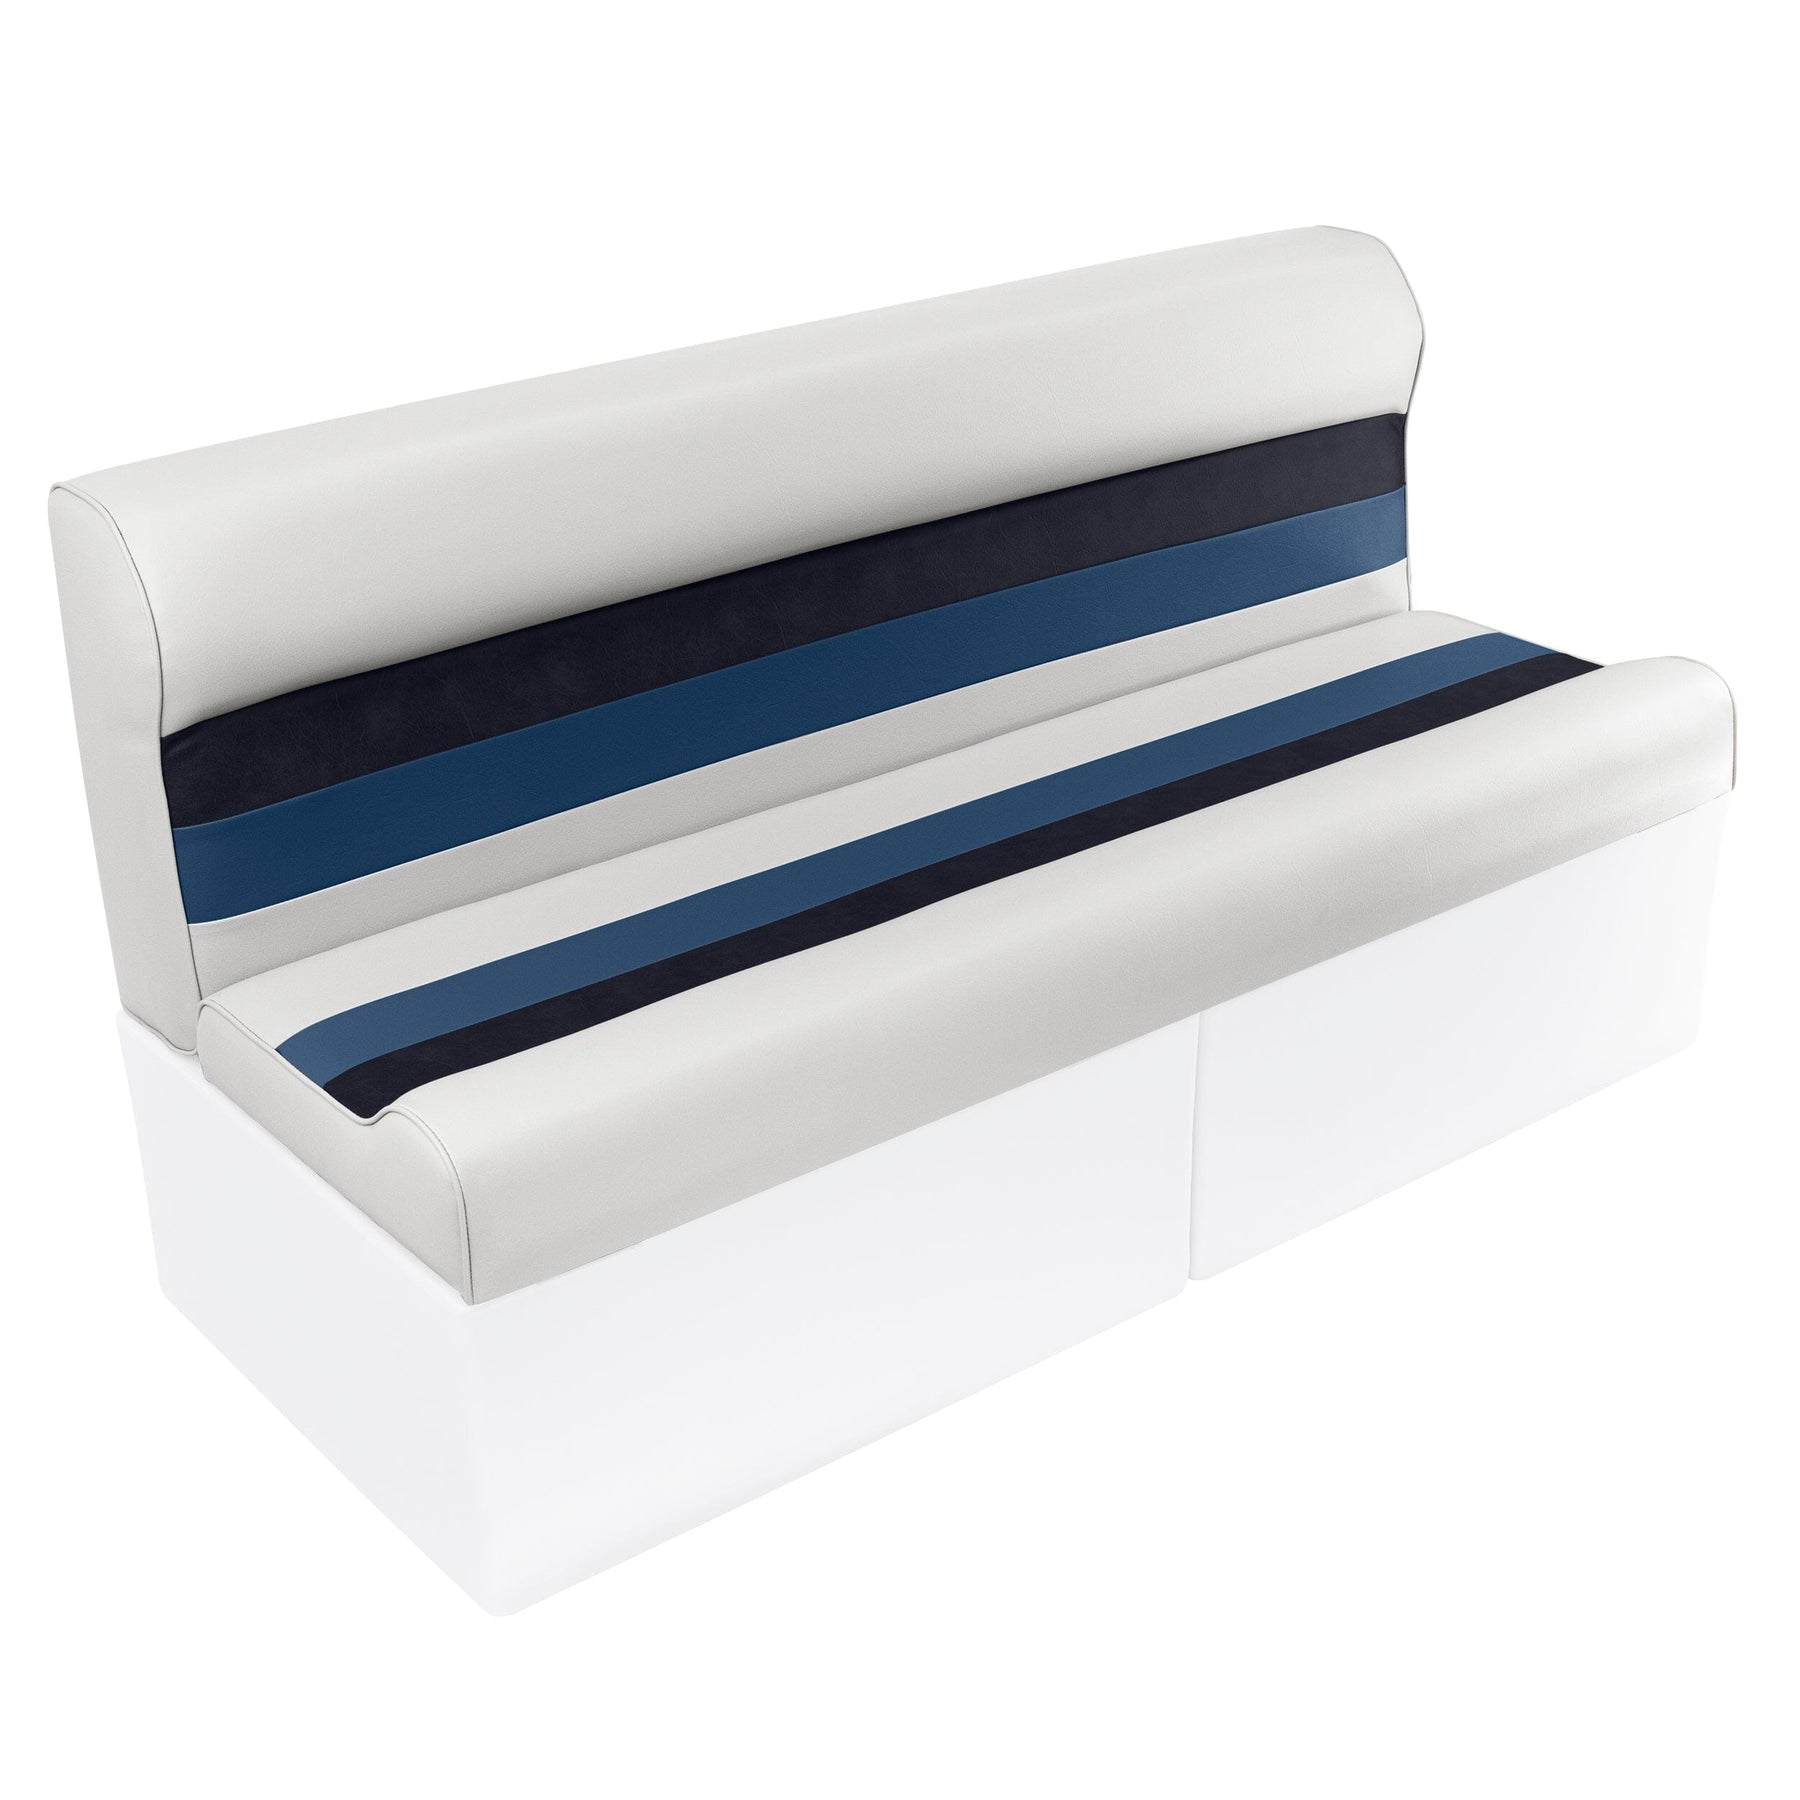 Wise Premier Pontoon Series, 36 Bench Seat Cushion ONLY – Pontoon